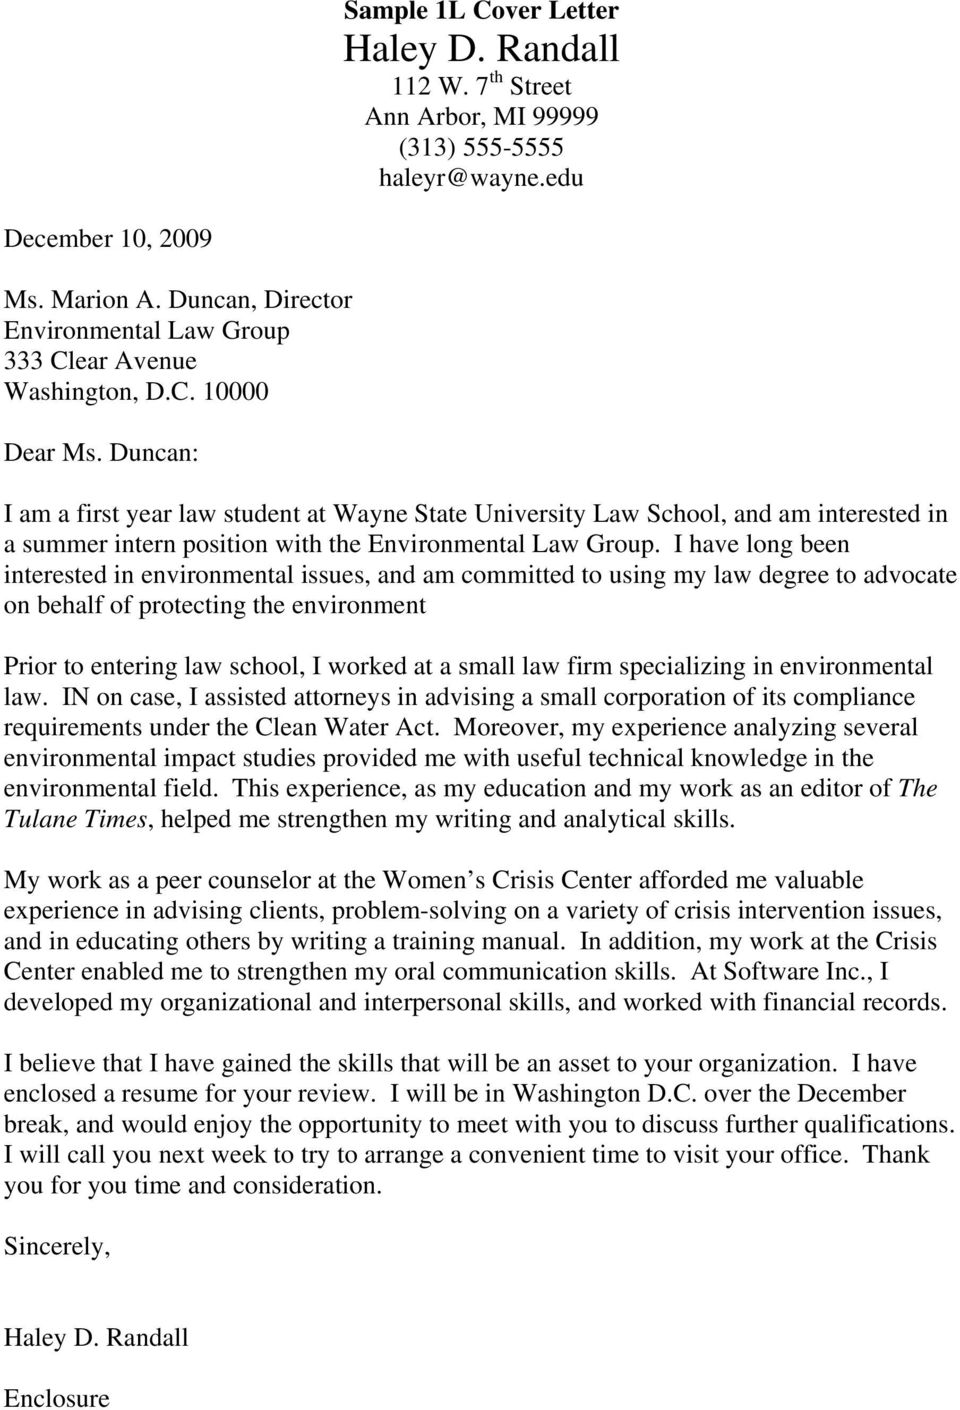 Cover Letter Law Student Sample Cover Letter